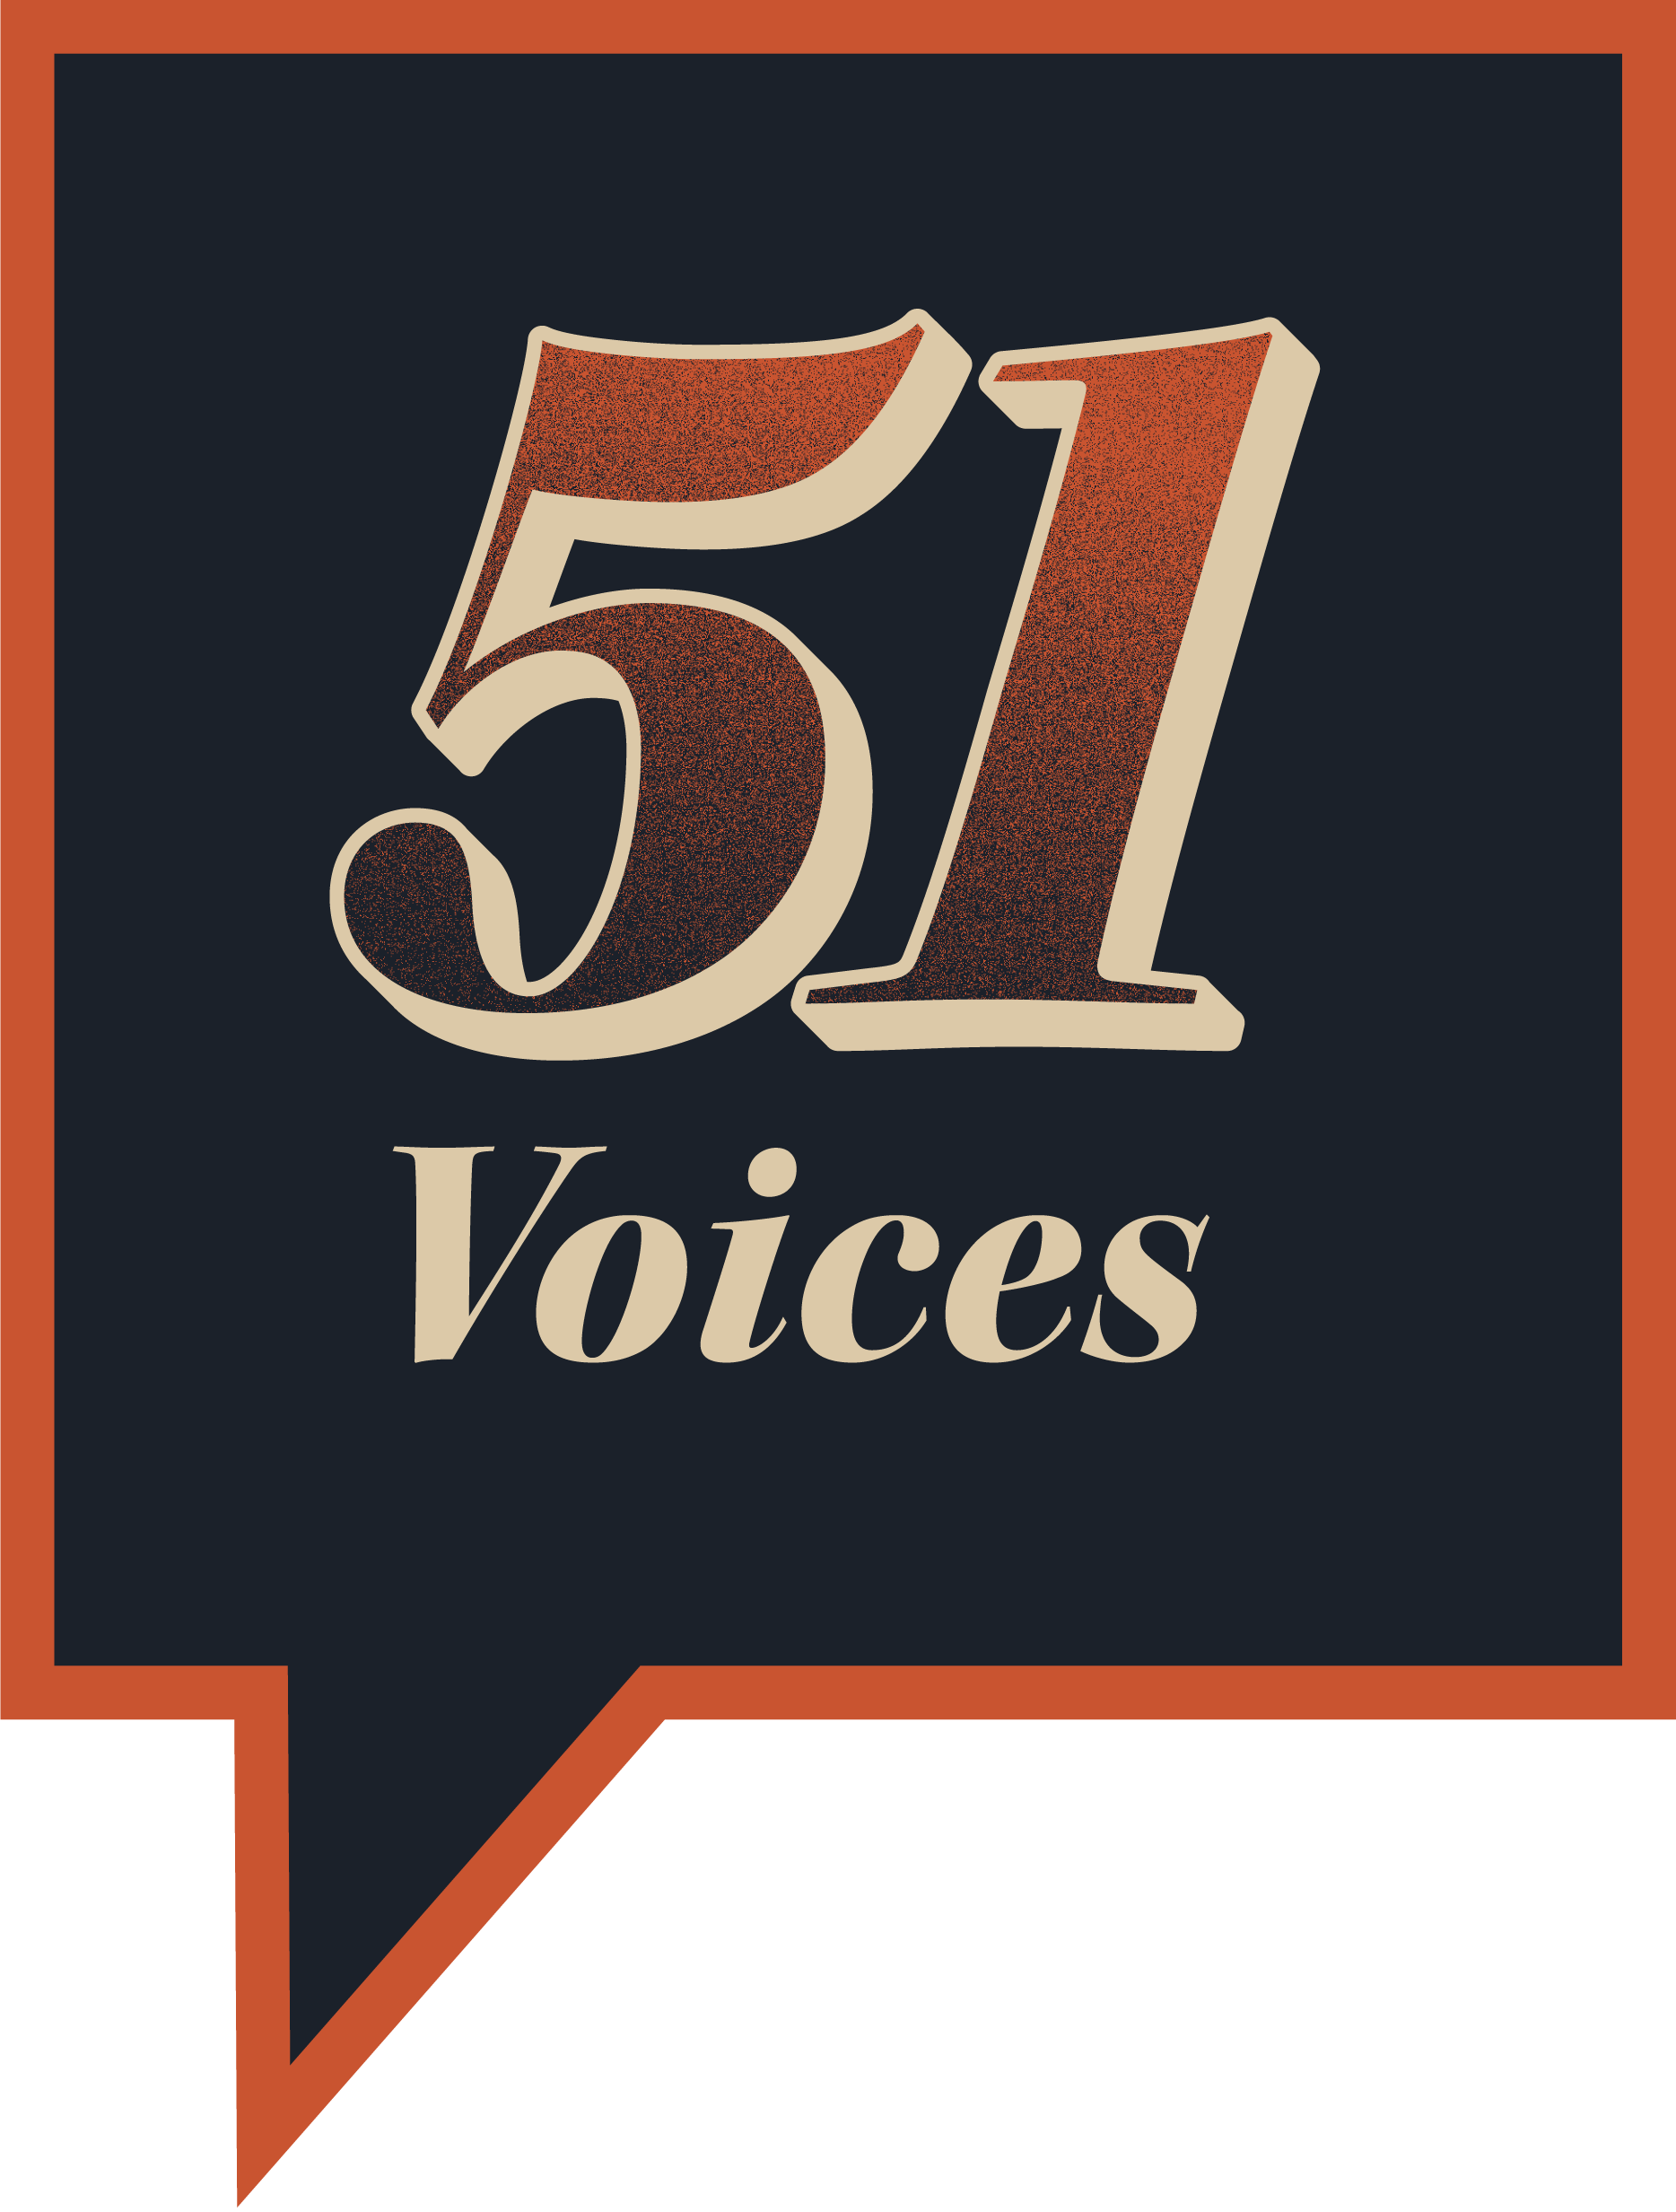 51 Voices logo.